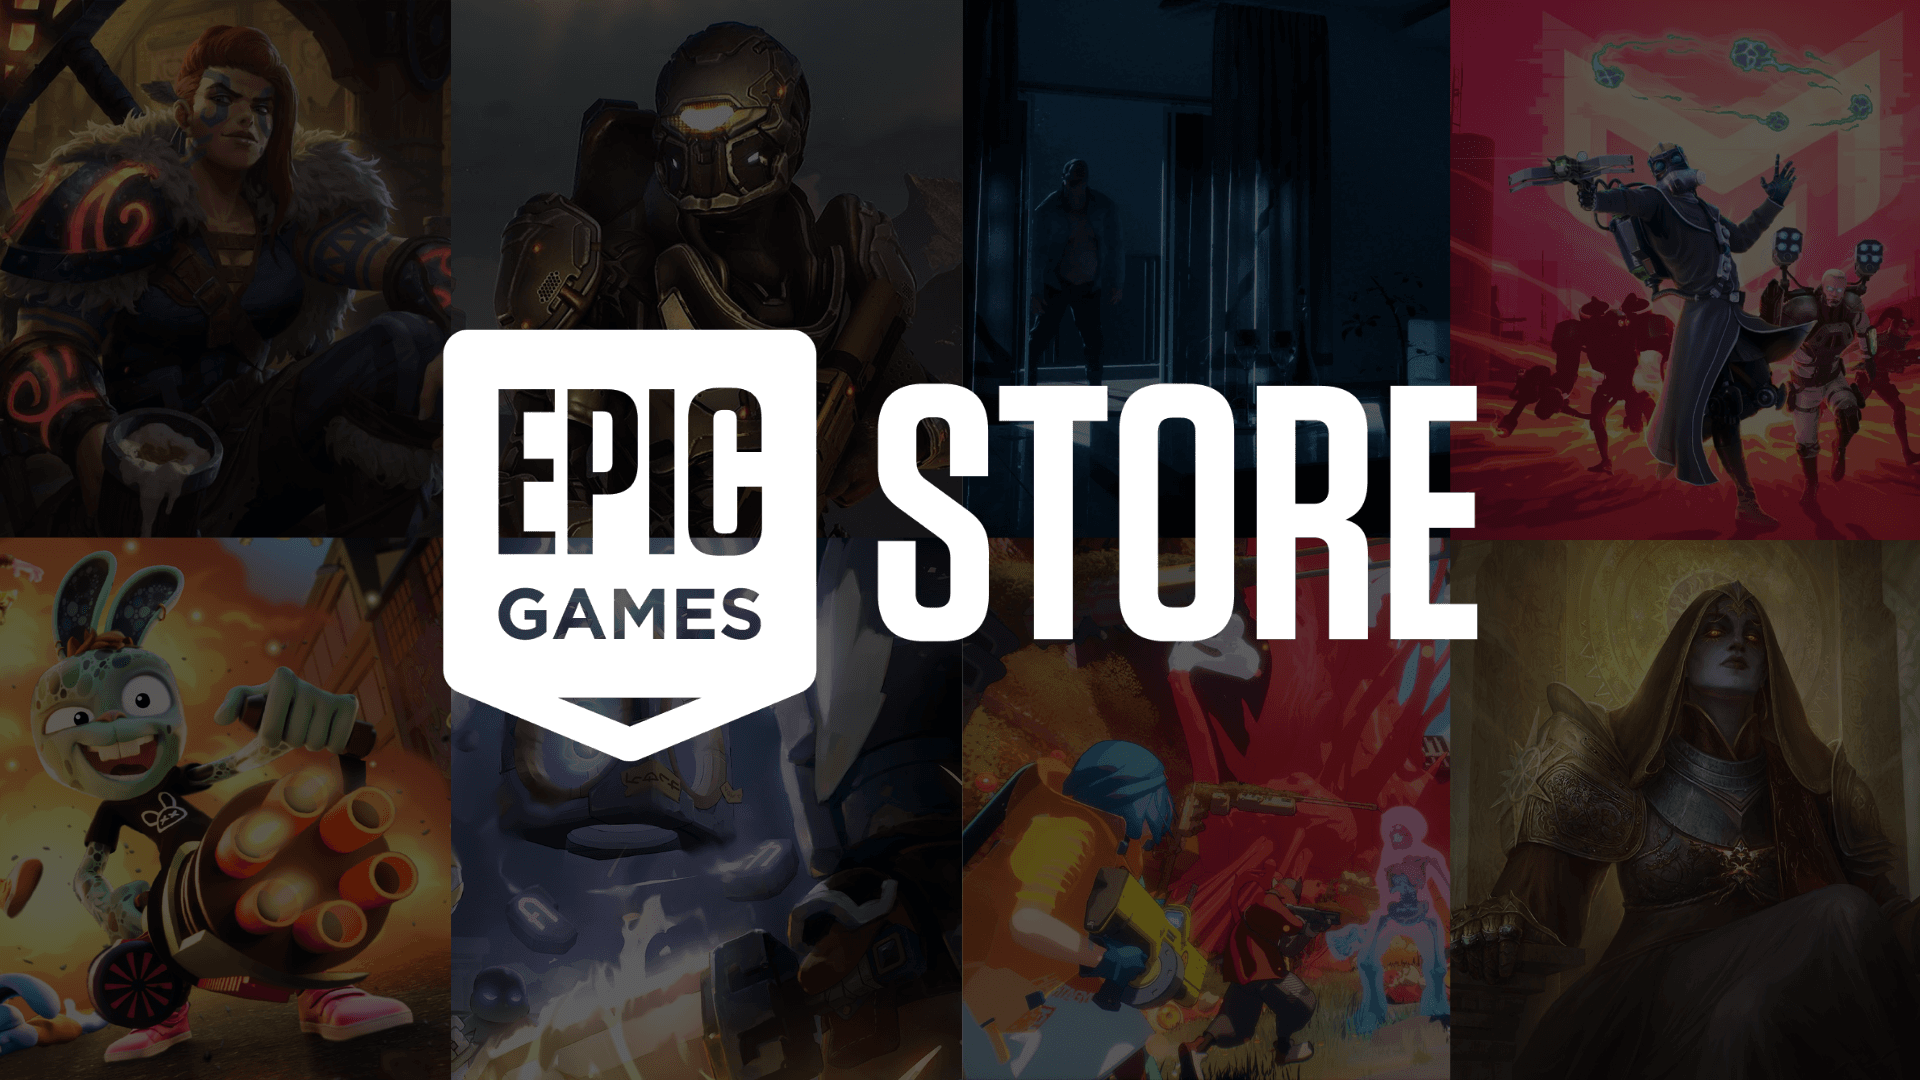 Epic Games Store login and registration error